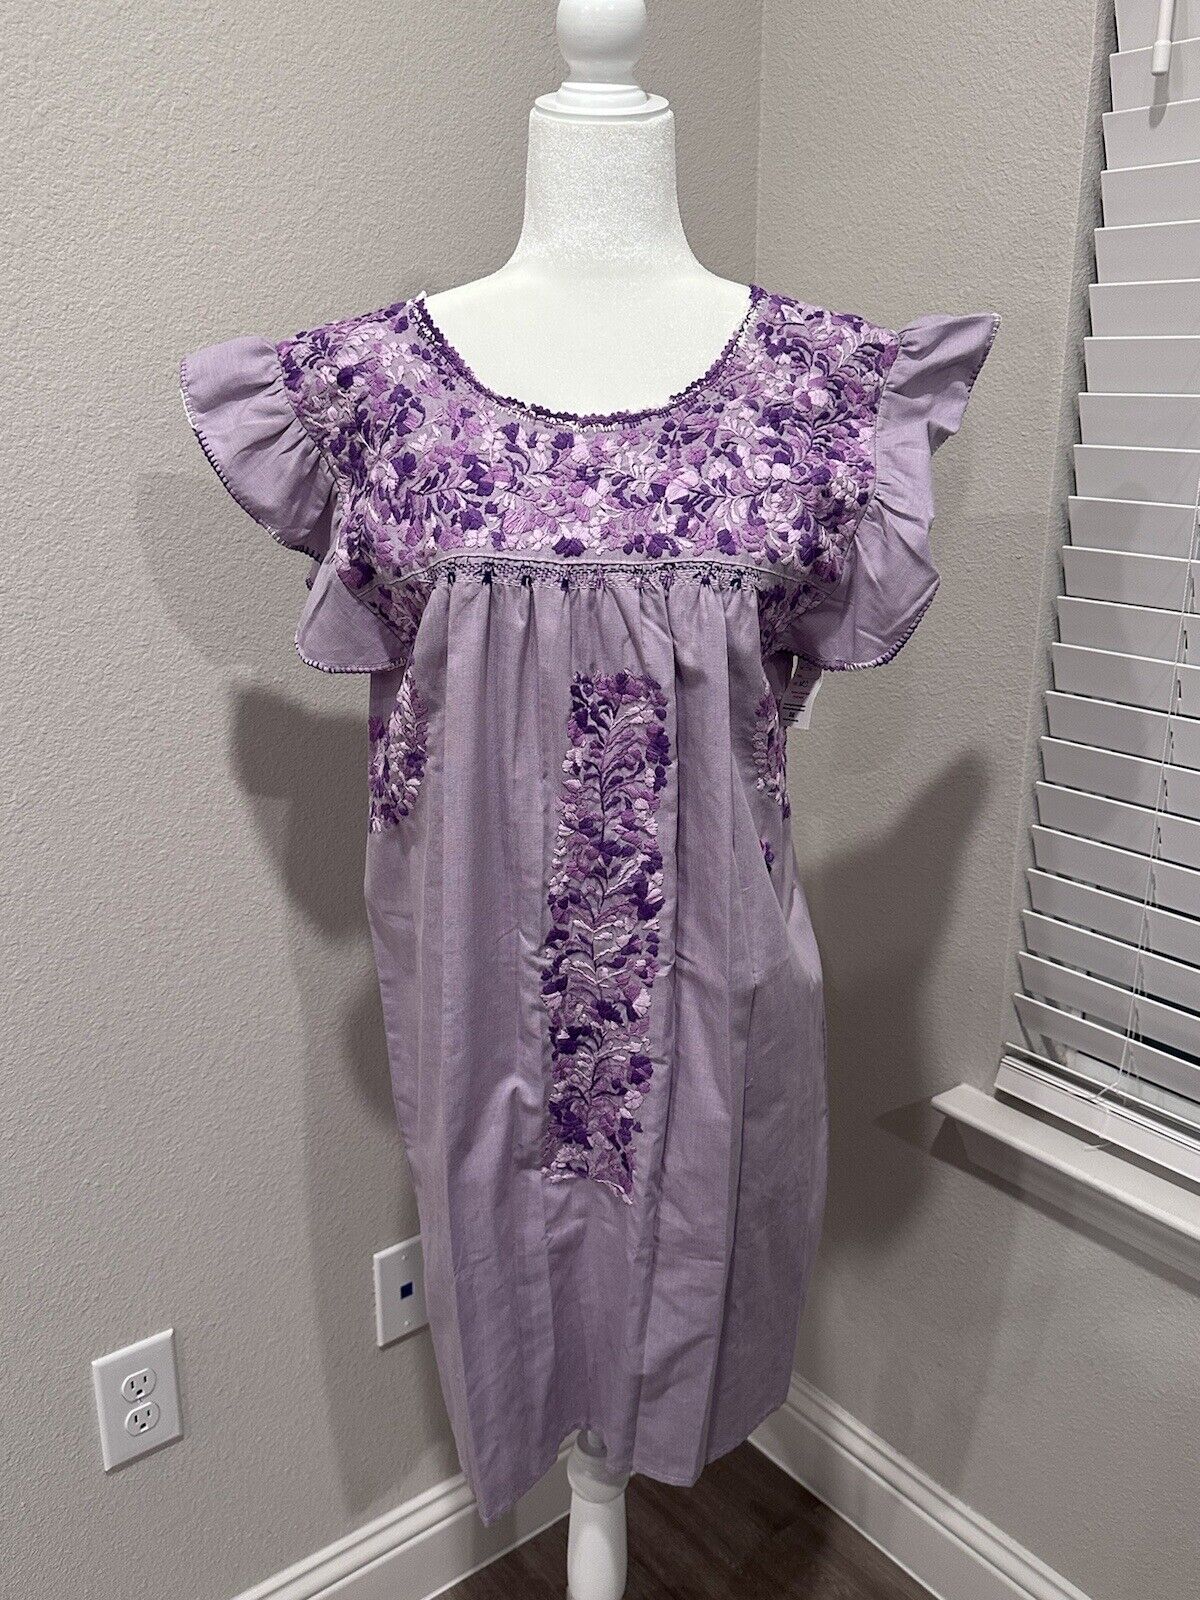 NWT Margarita Mercantile Sara Purple Embroidered Dress Size S/M Bohemian